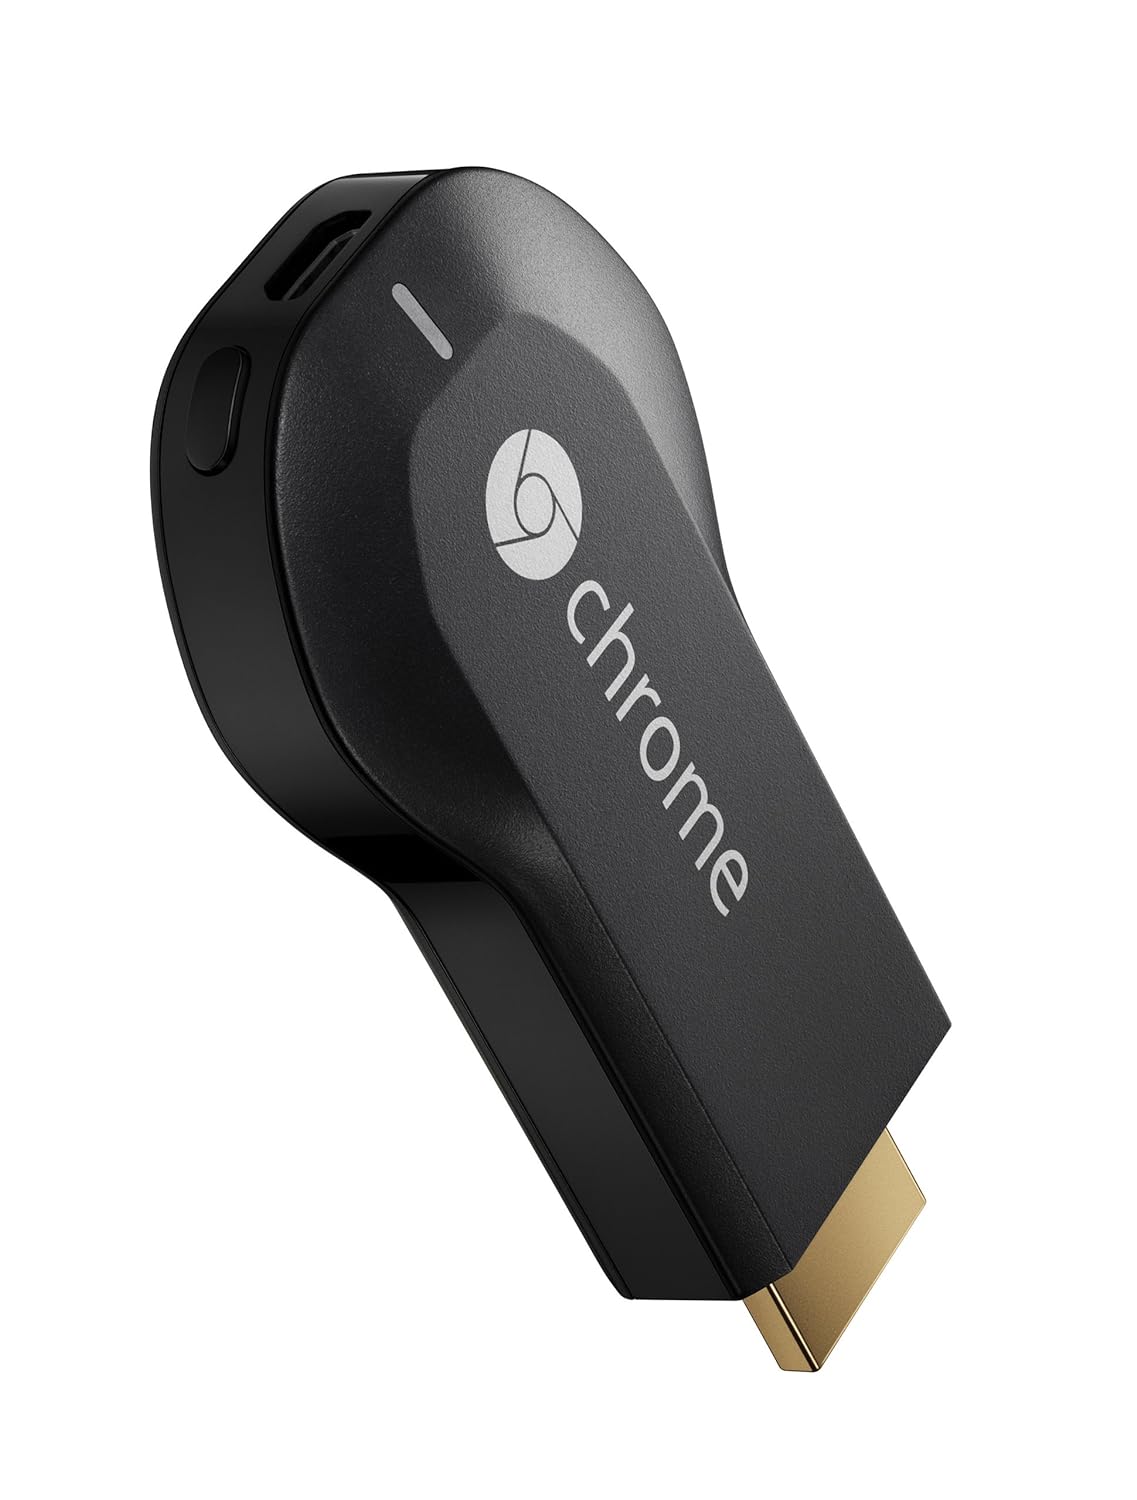 Google Chromecast HDMI Streaming Media